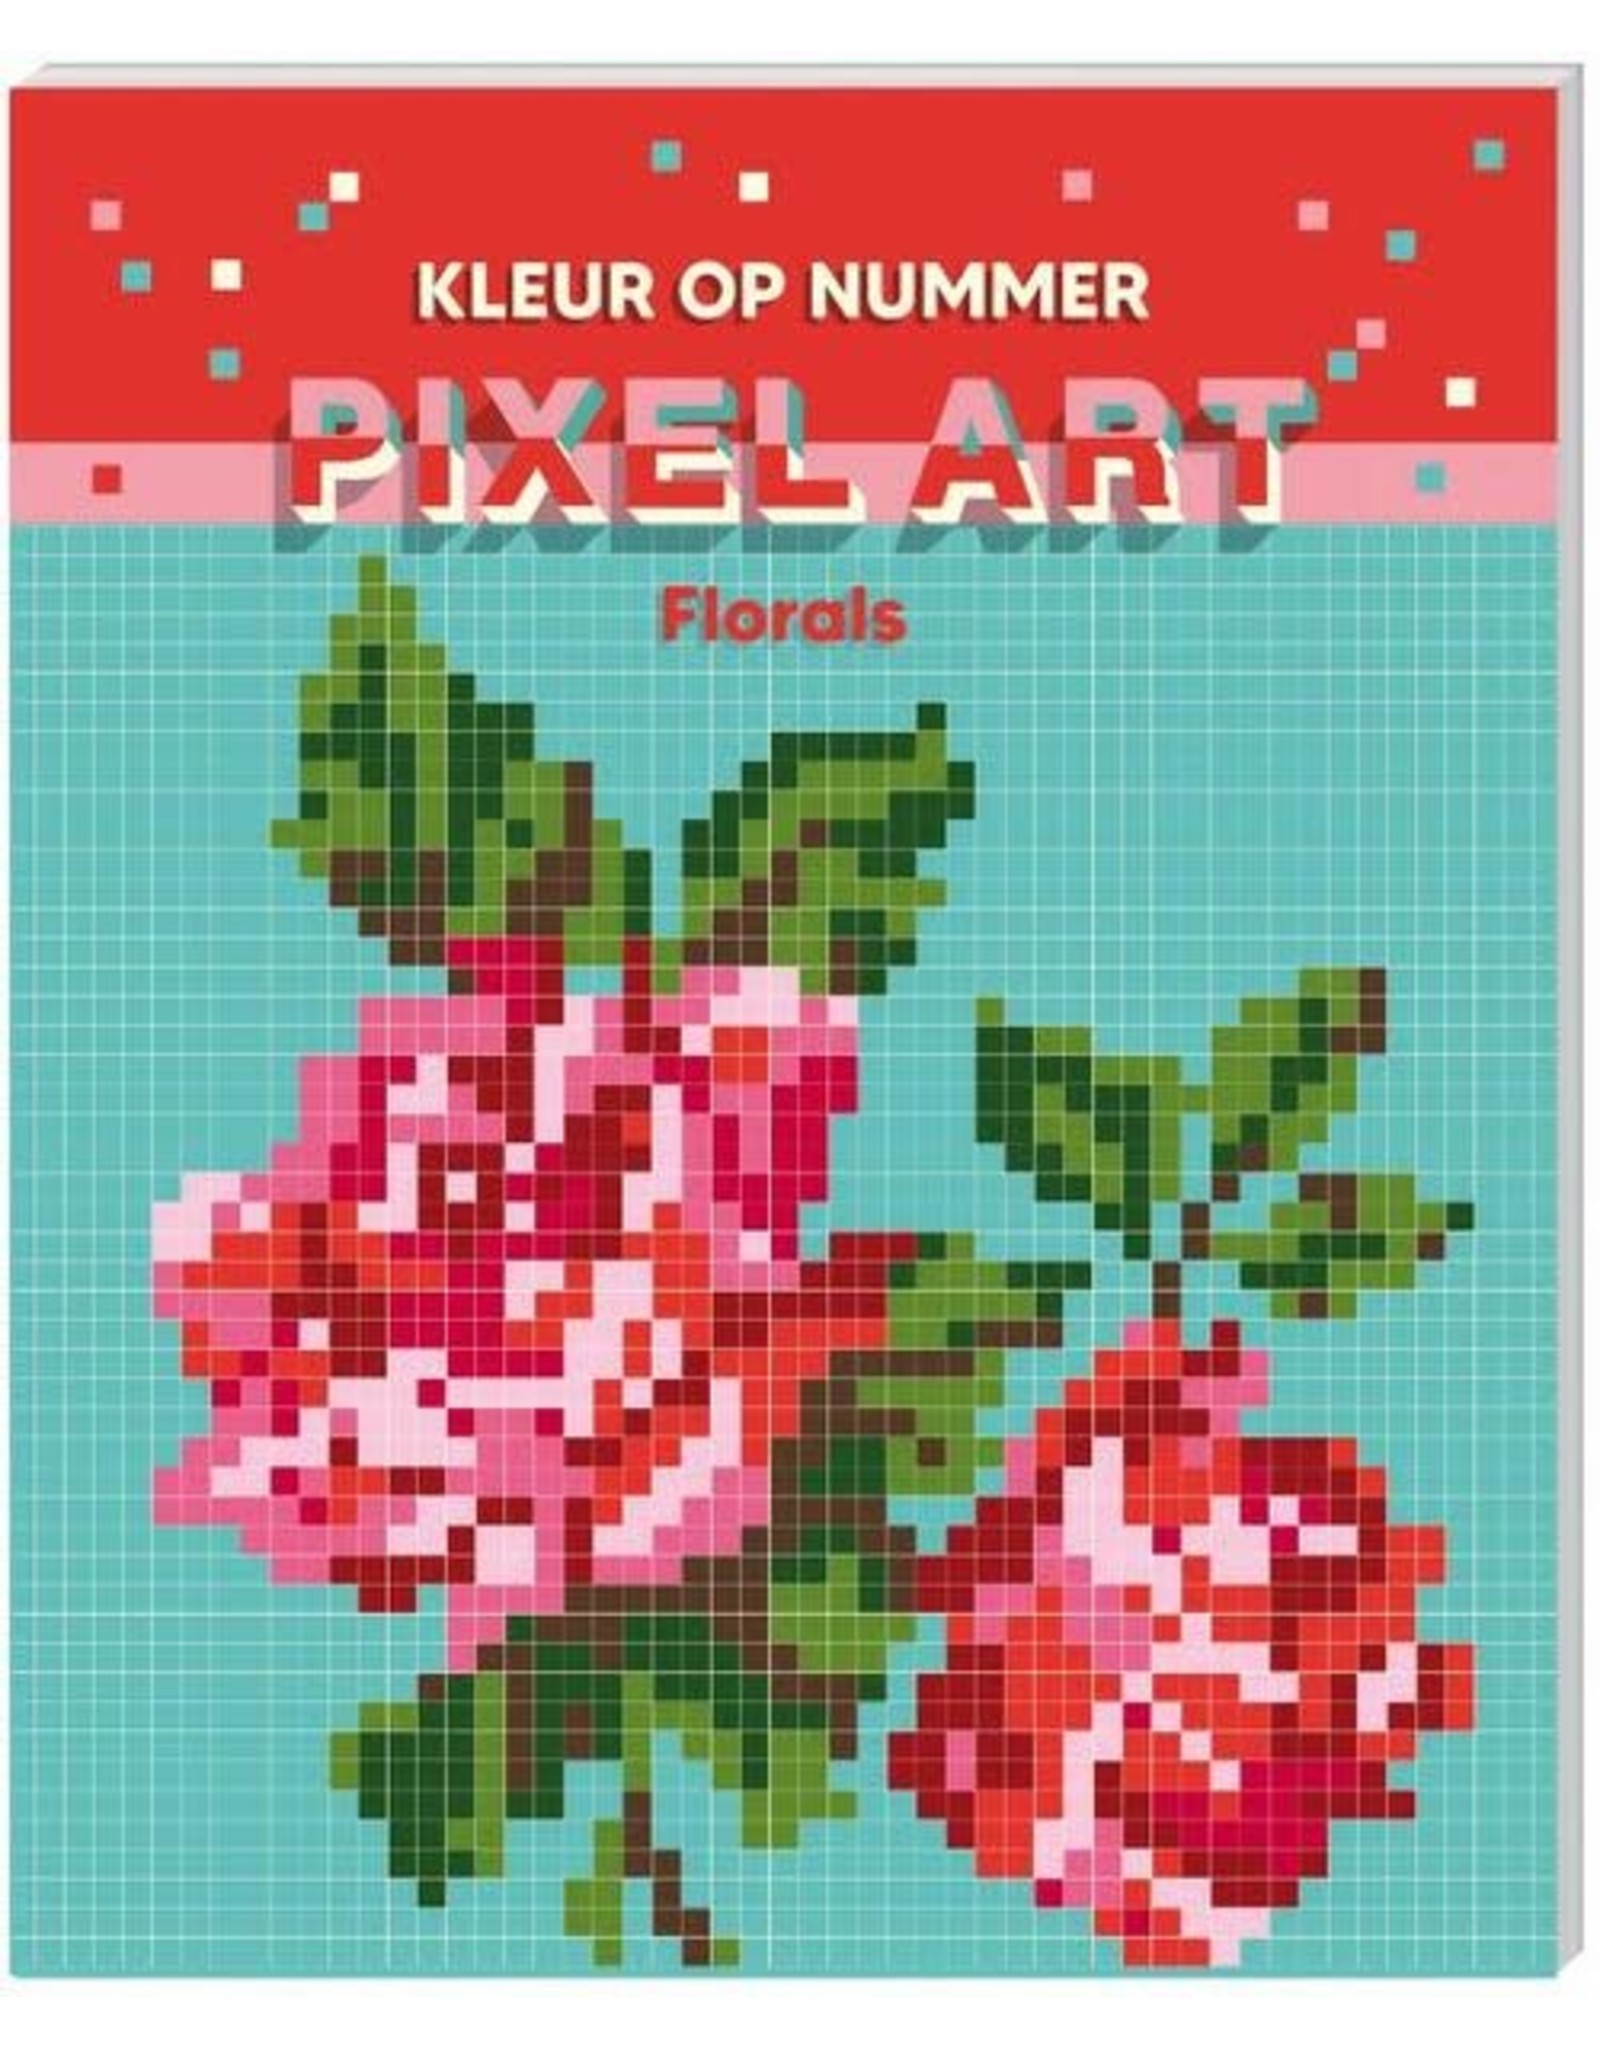 Kleuren op nummer - Pixel Art Florals